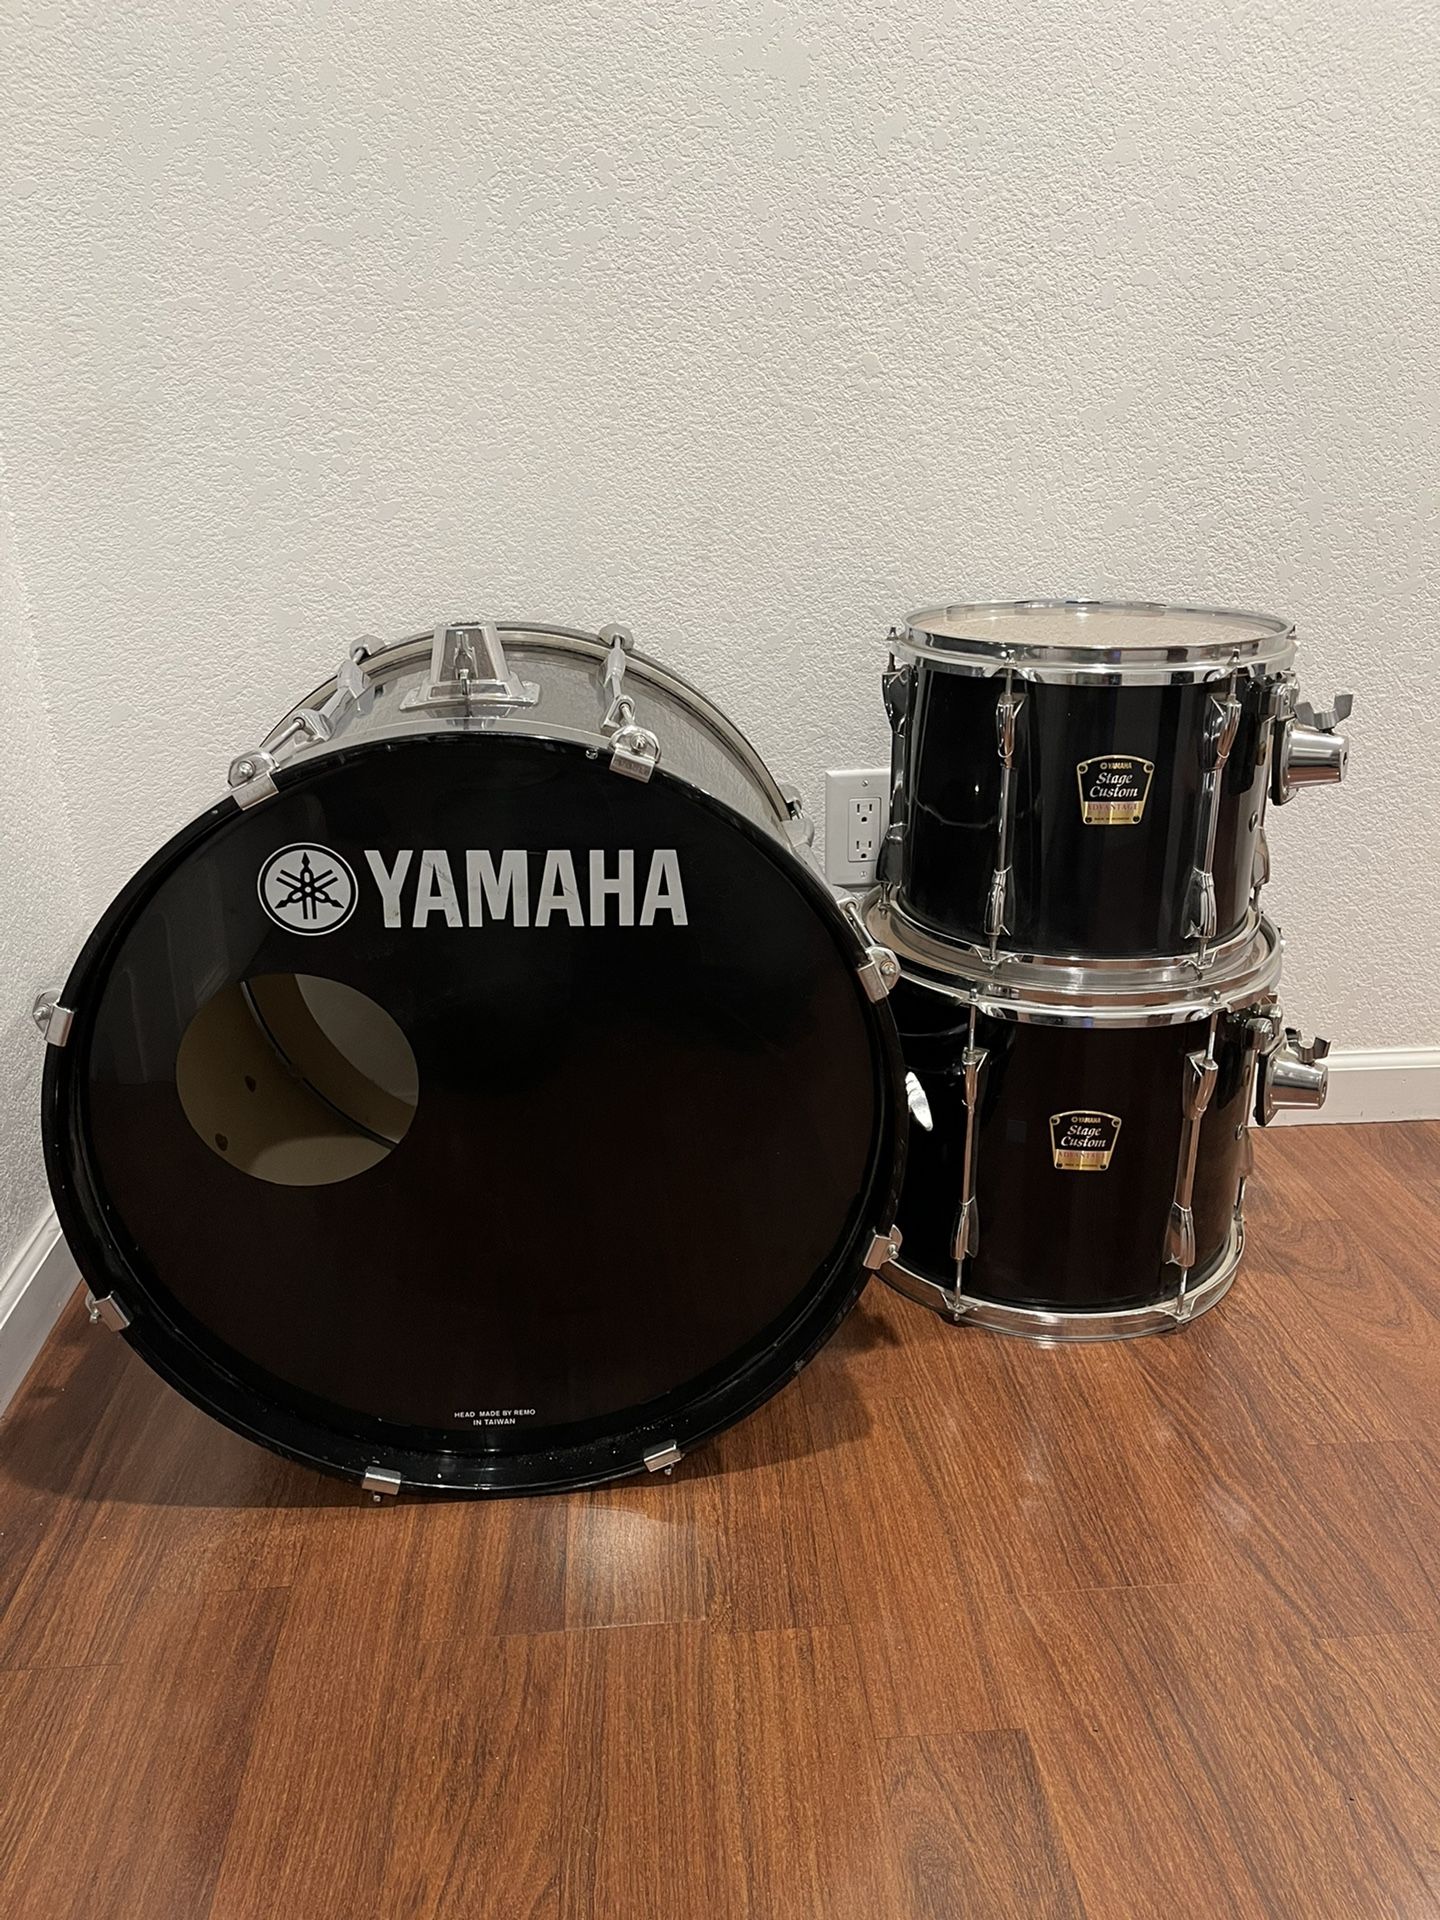 Yamaha Stage Drum Drums Kit Set 